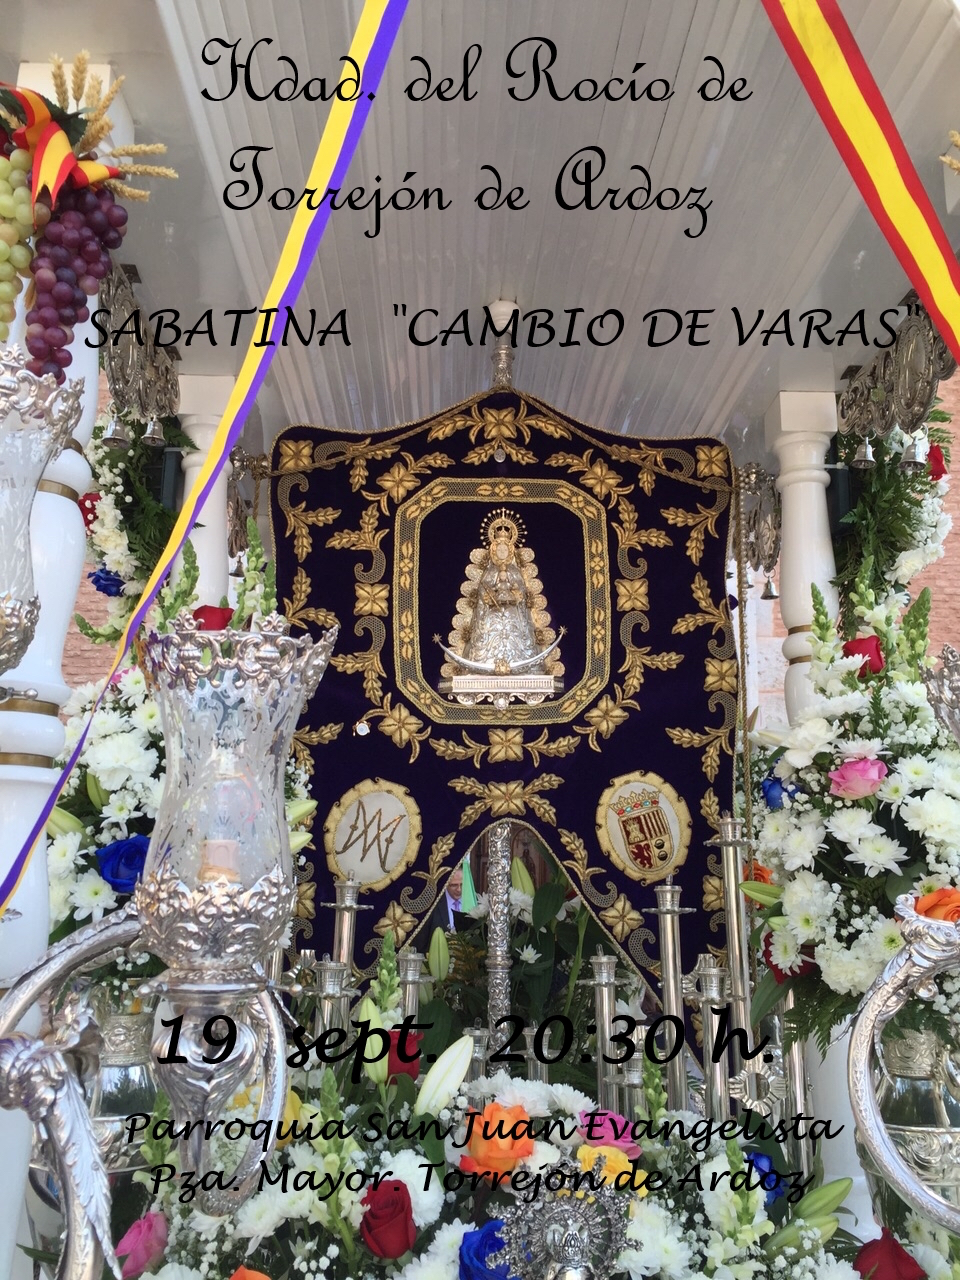 Torrejon-2015-cartel sabatina cambio varas 2015 torrejon